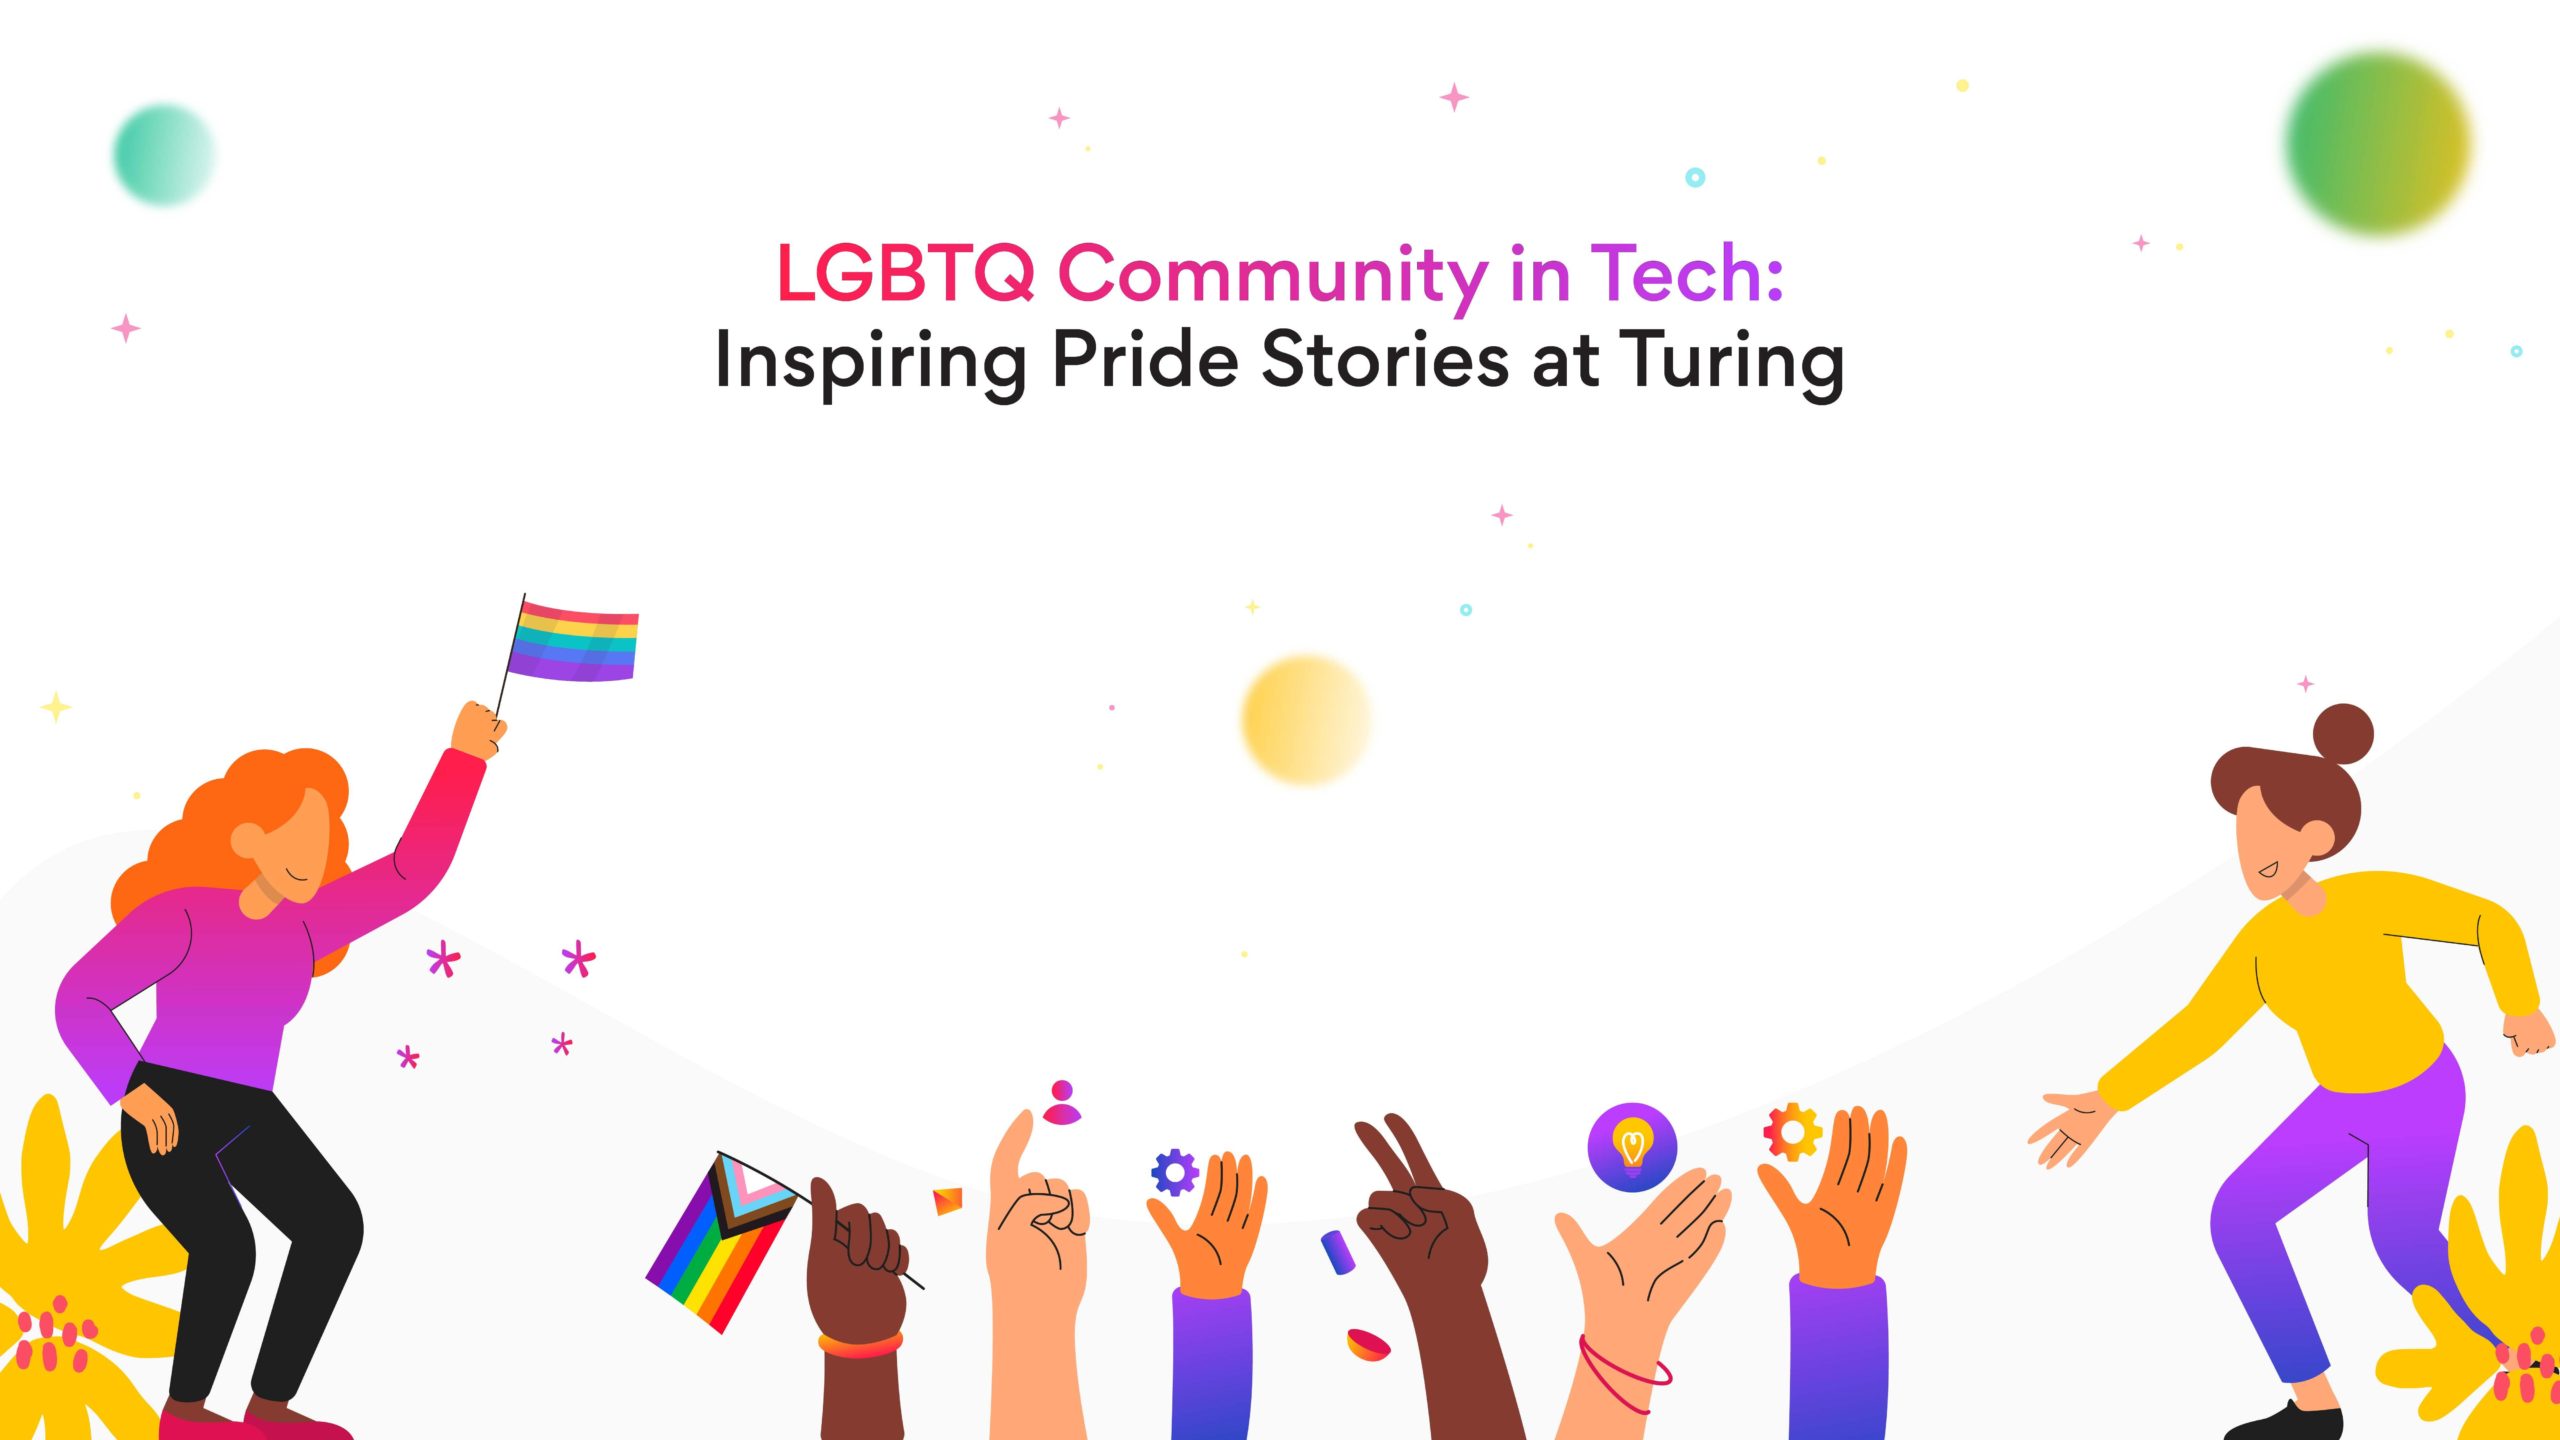 LGBTQ Community in Tech: Inspiring Pride Stories at Turing